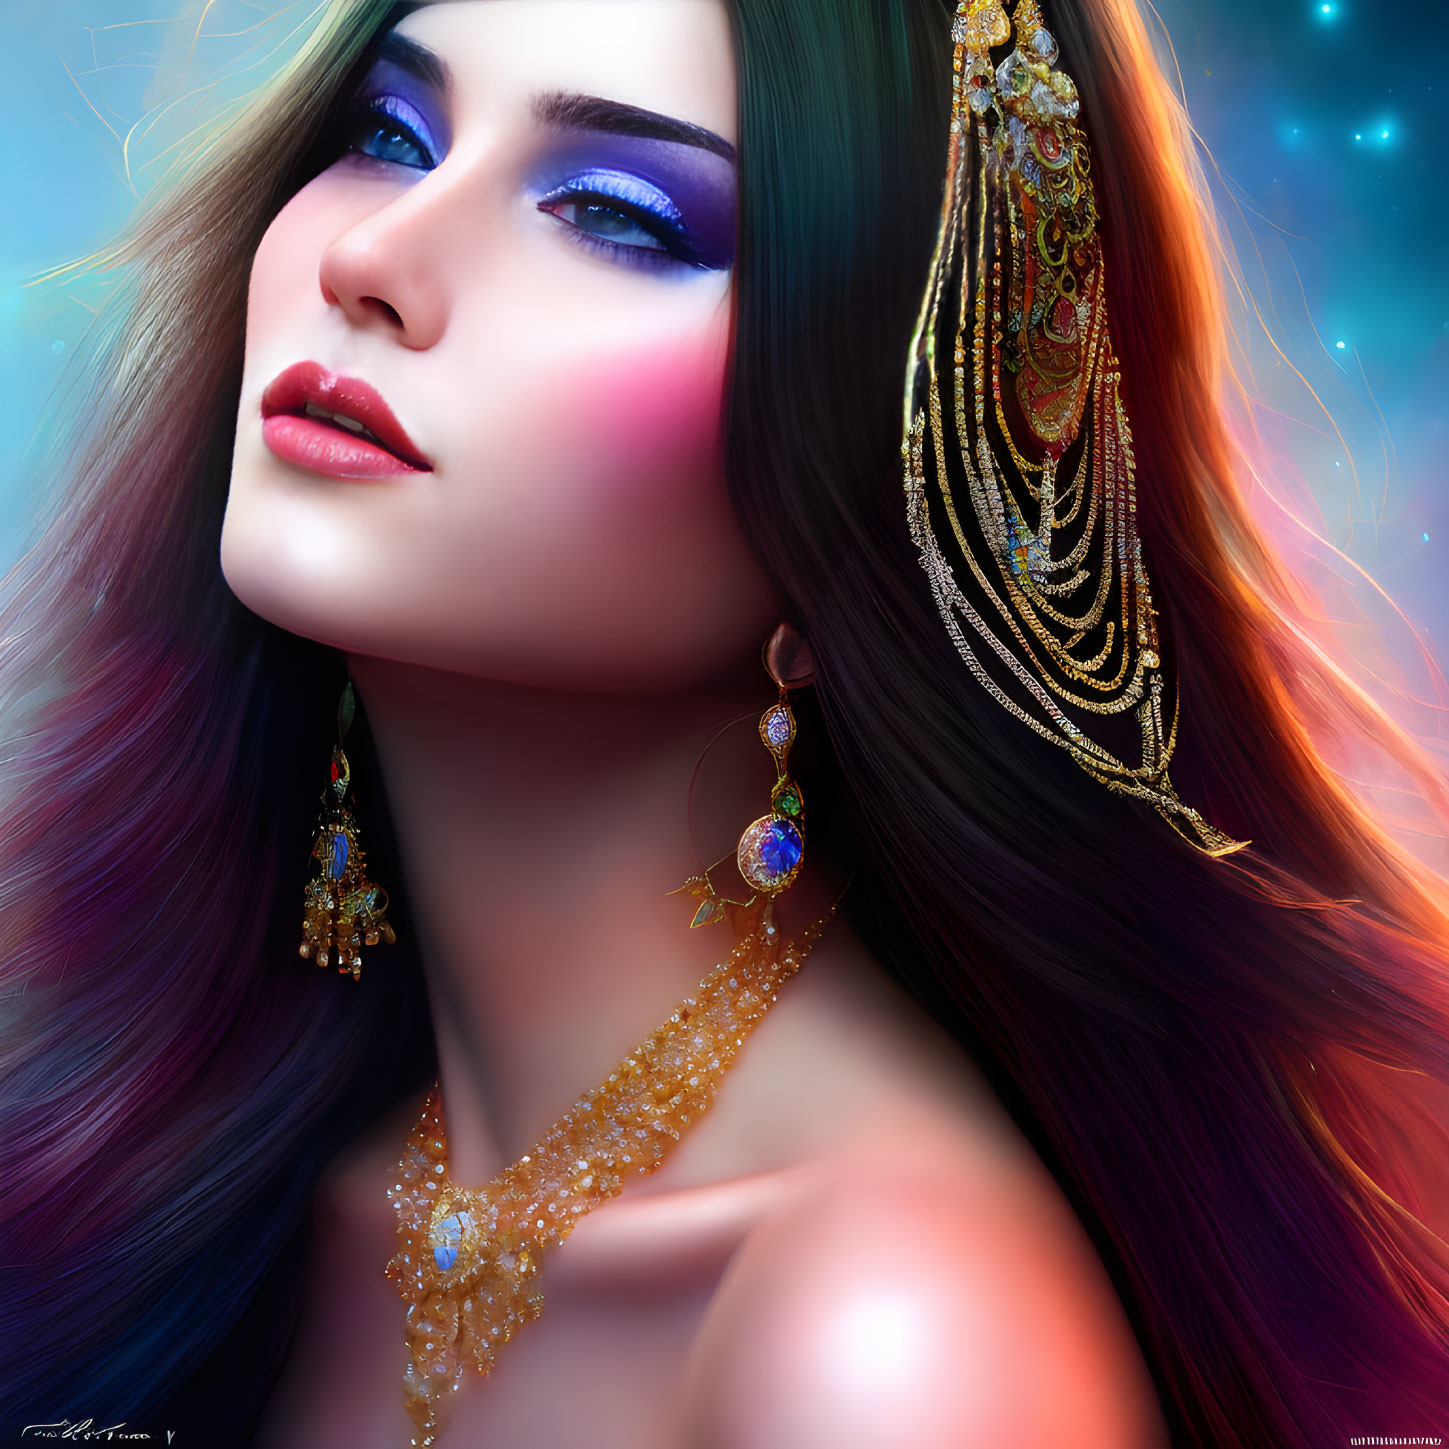 Vibrant purple hair and striking blue eye makeup portrait.